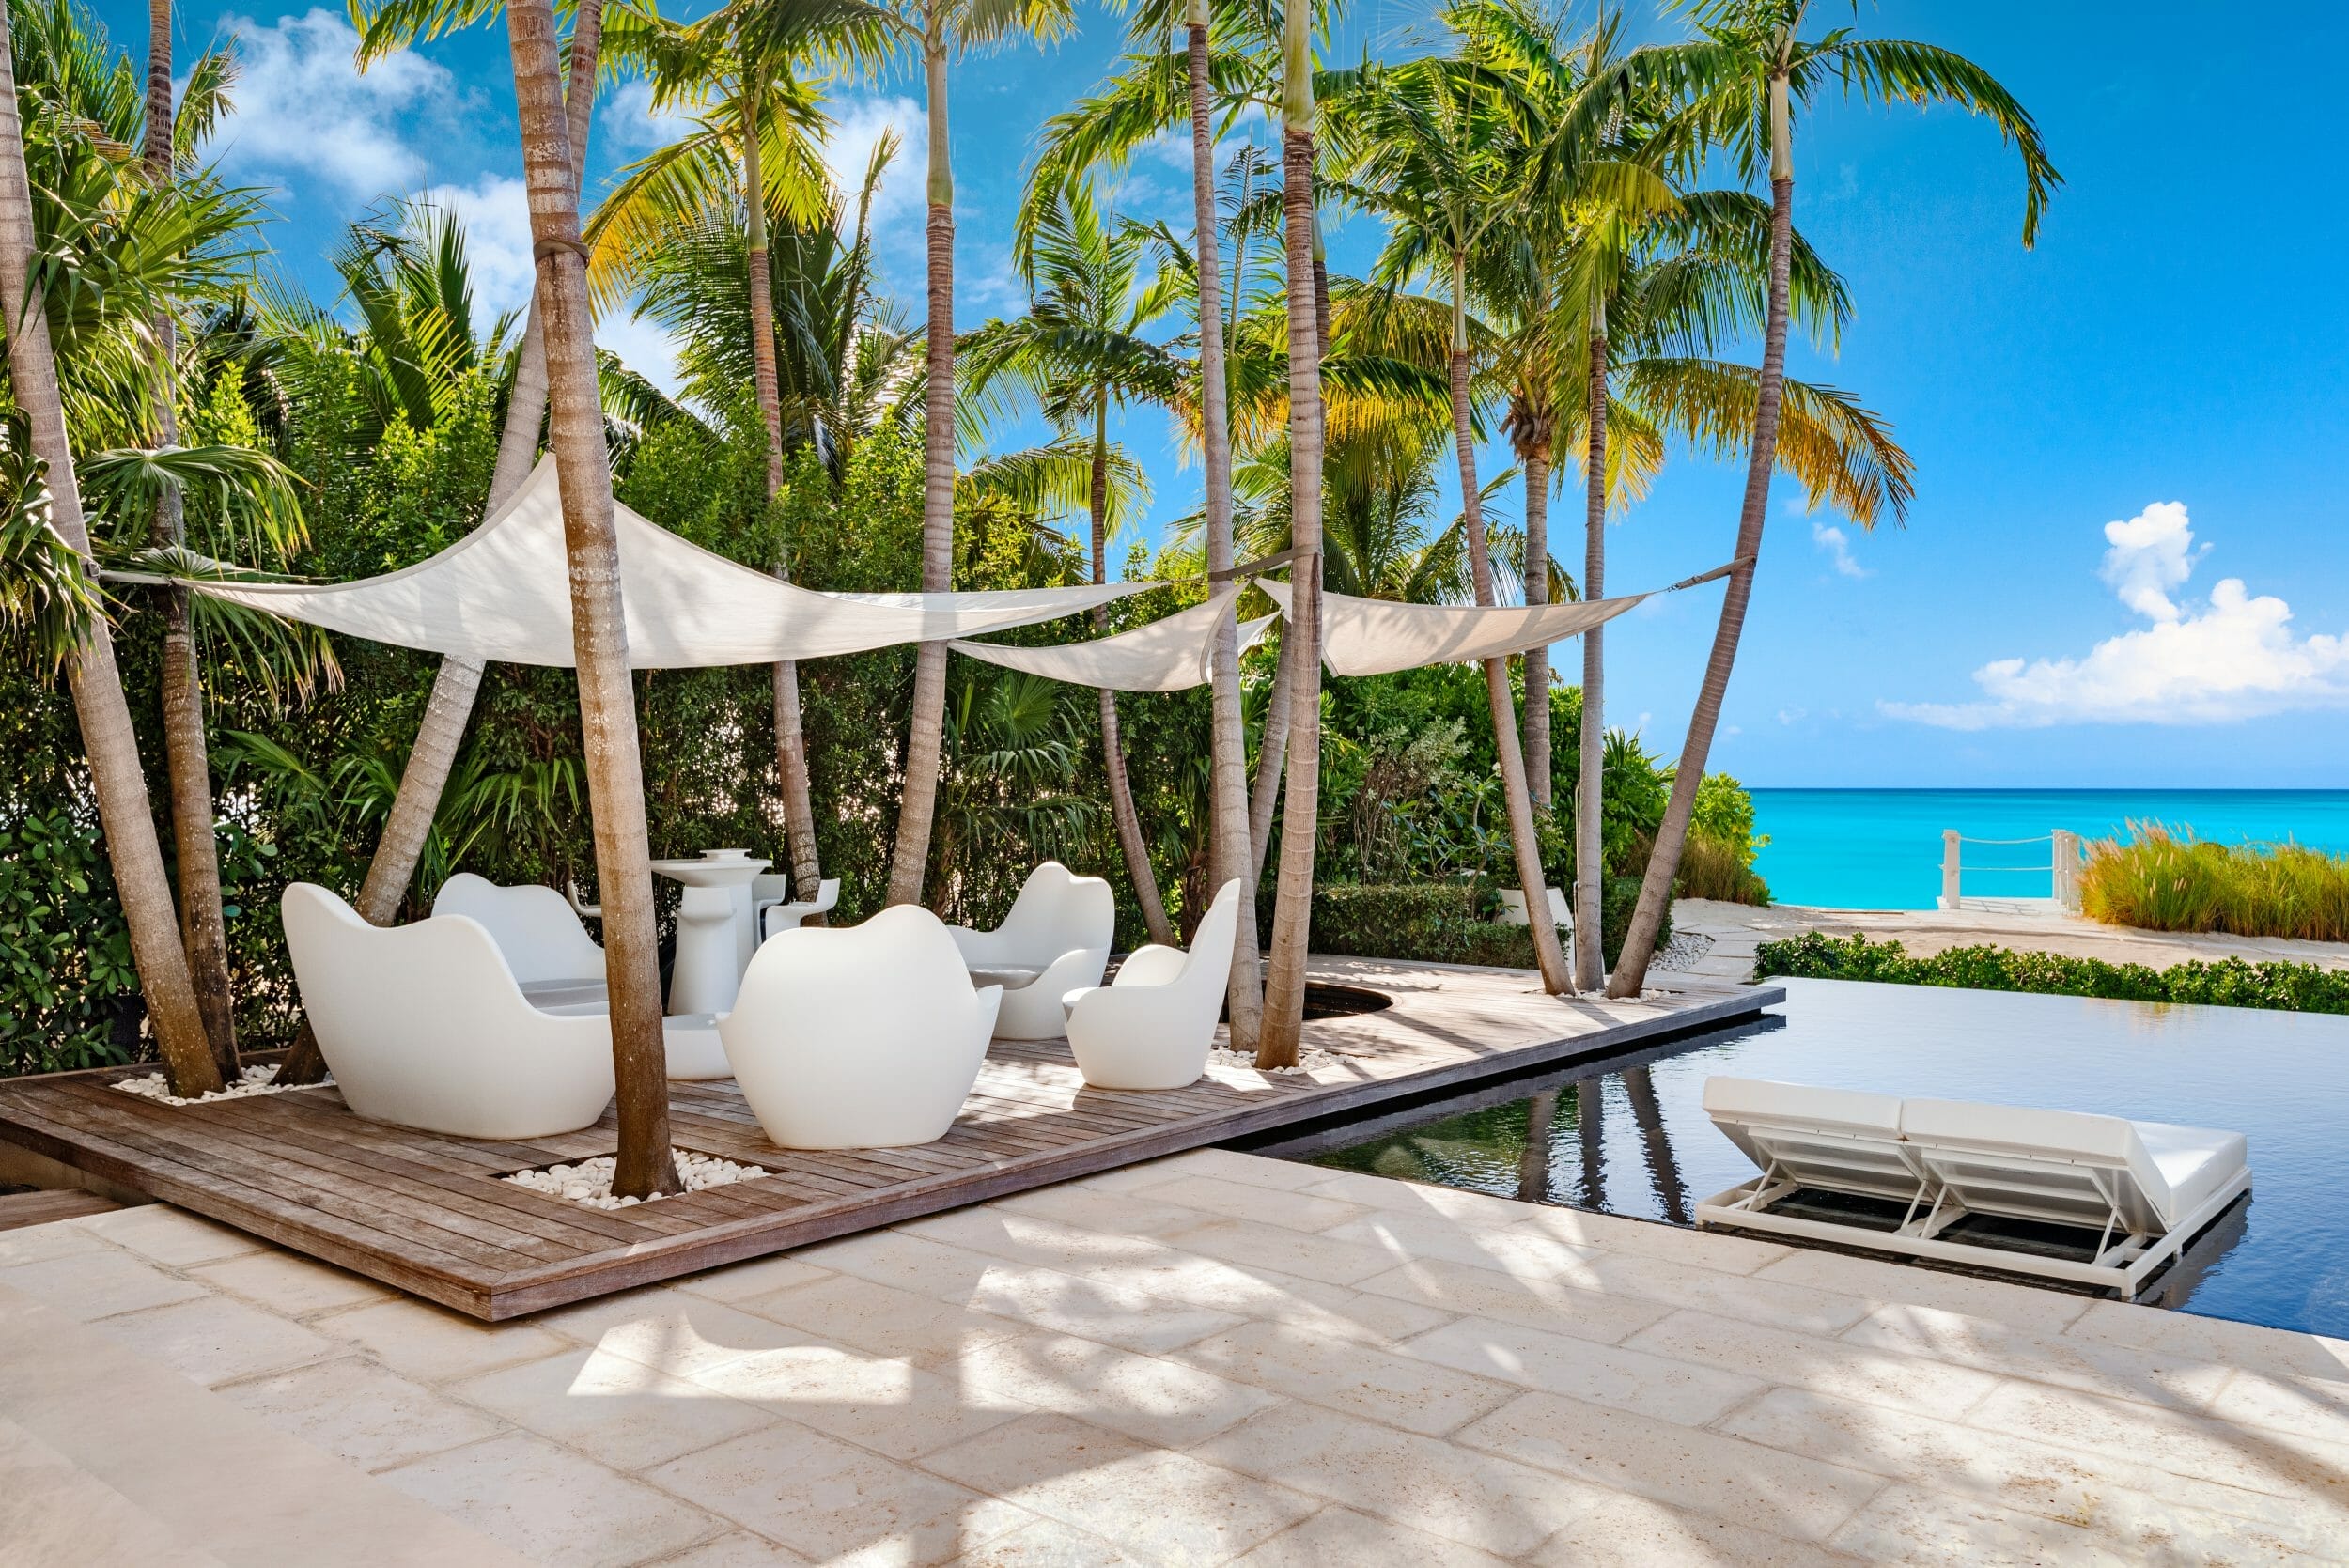 Villa AWA - The Finest Luxury Villa Rentals in Turks & Caicos